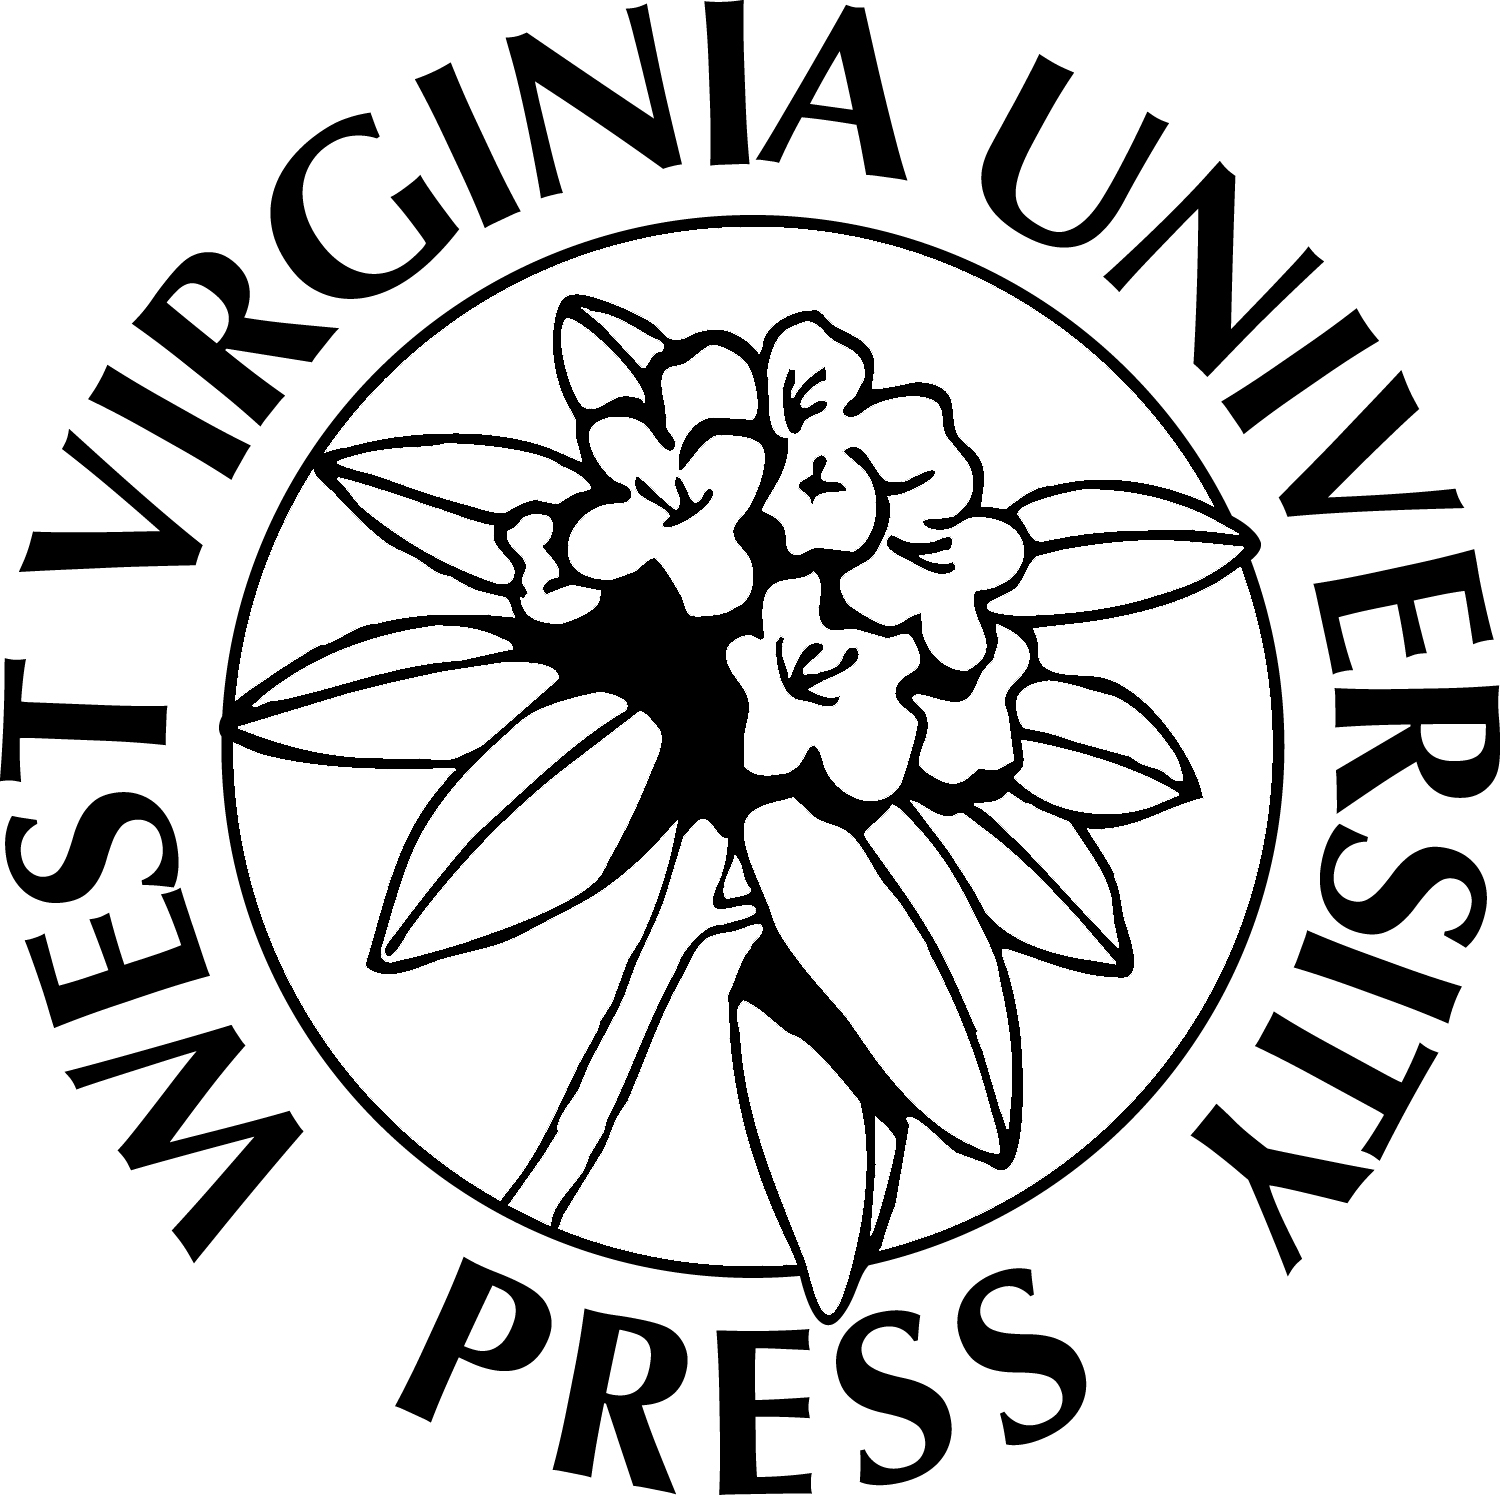 UBC - Agency Logos - West Virginia University Press logo